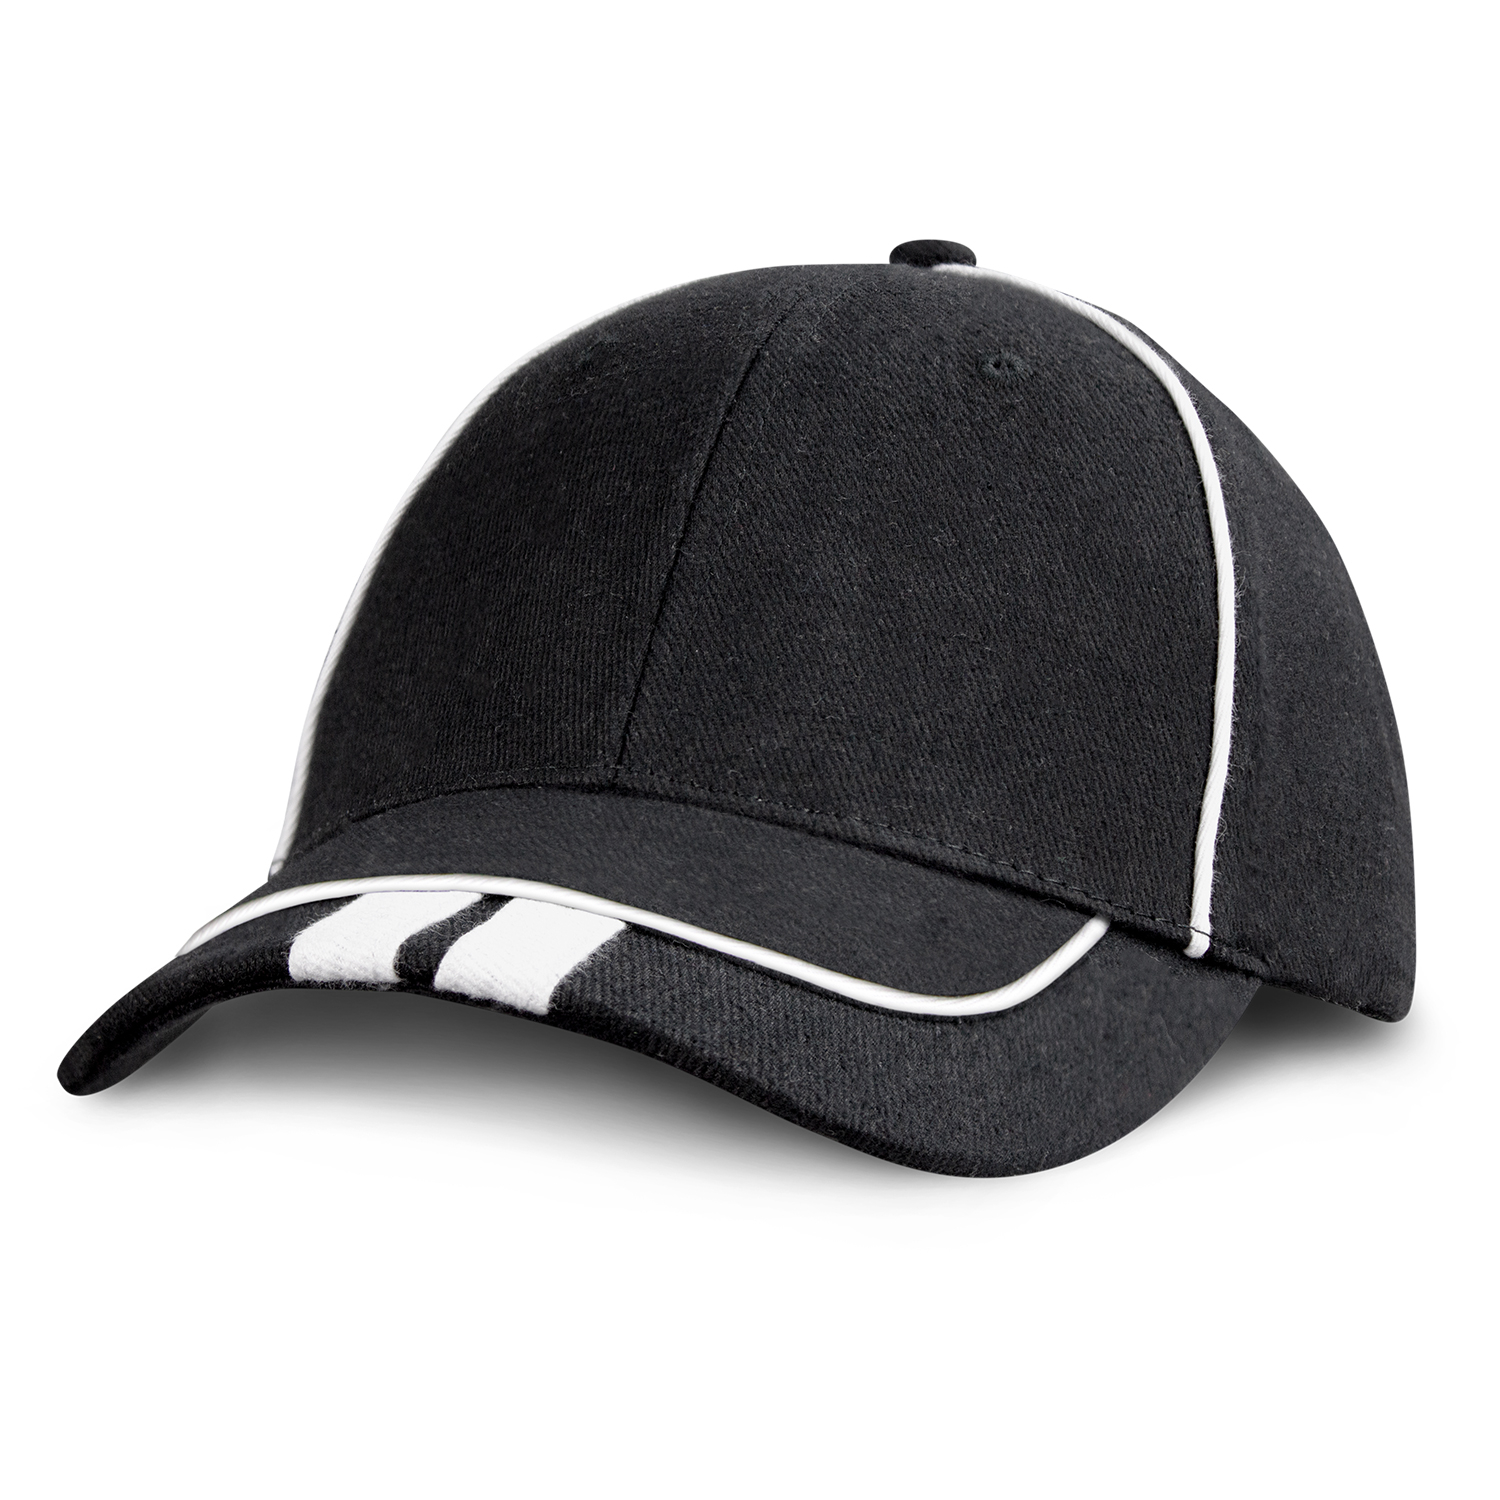 Summer Hanford Cap cap